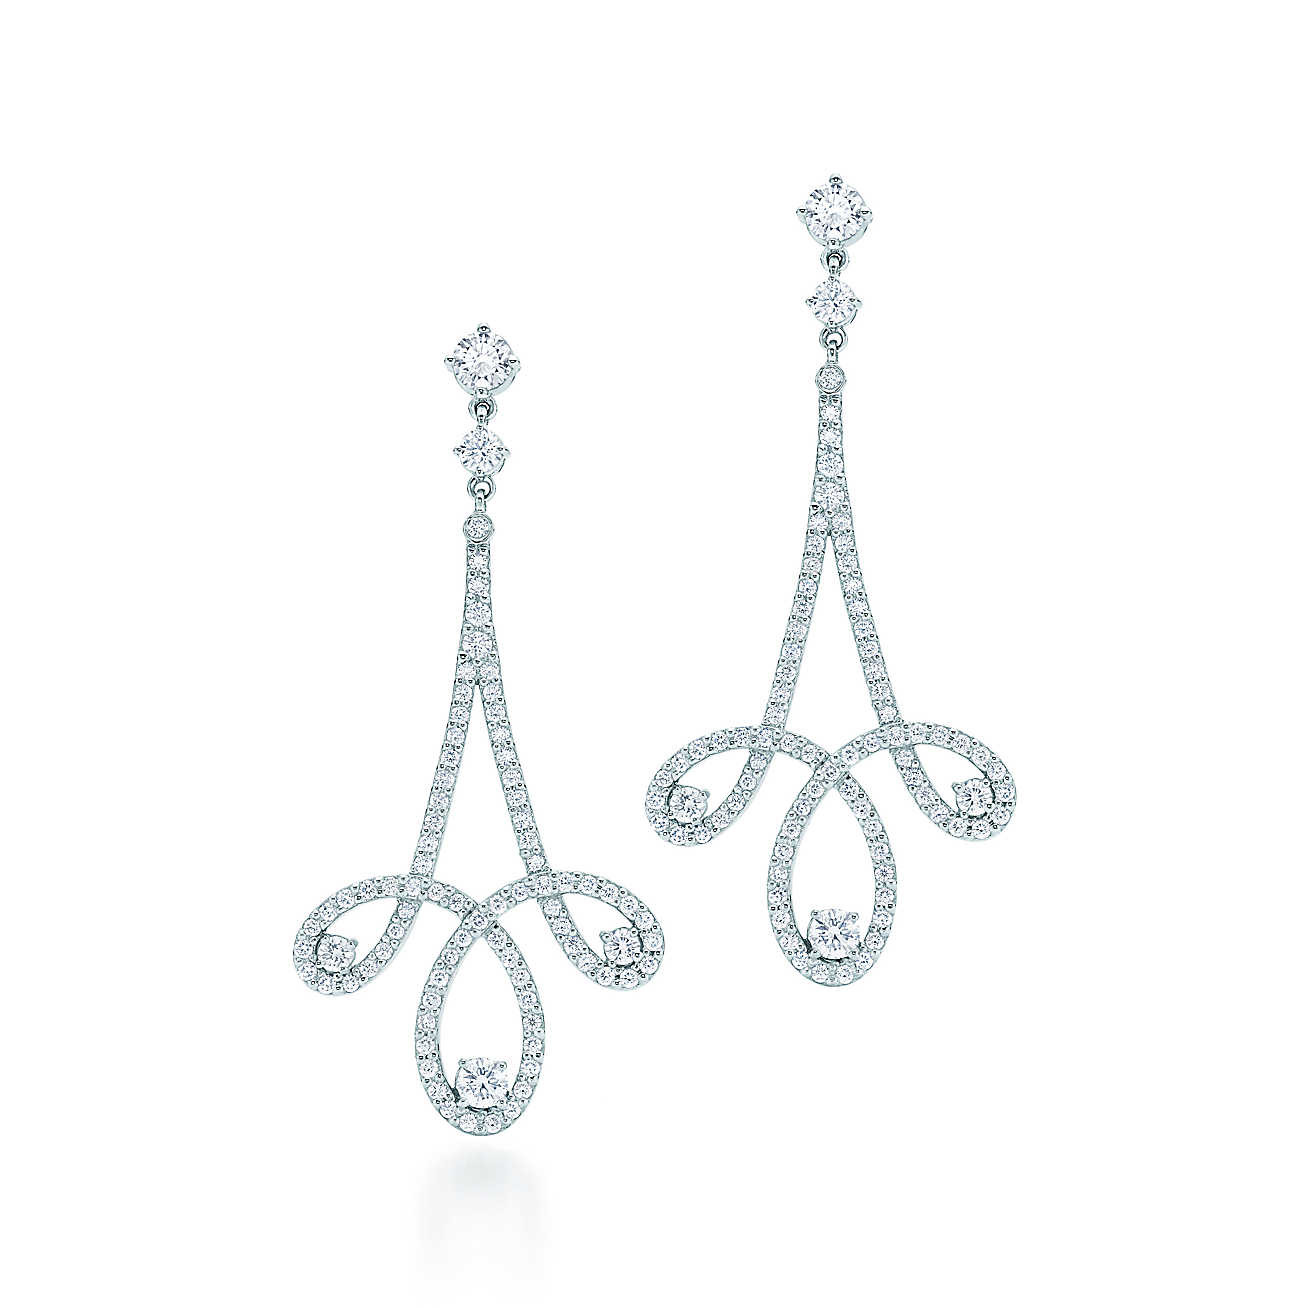 Tiffany Diamond Earrings
 Tiffany Enchant scroll earrings in platinum with diamonds